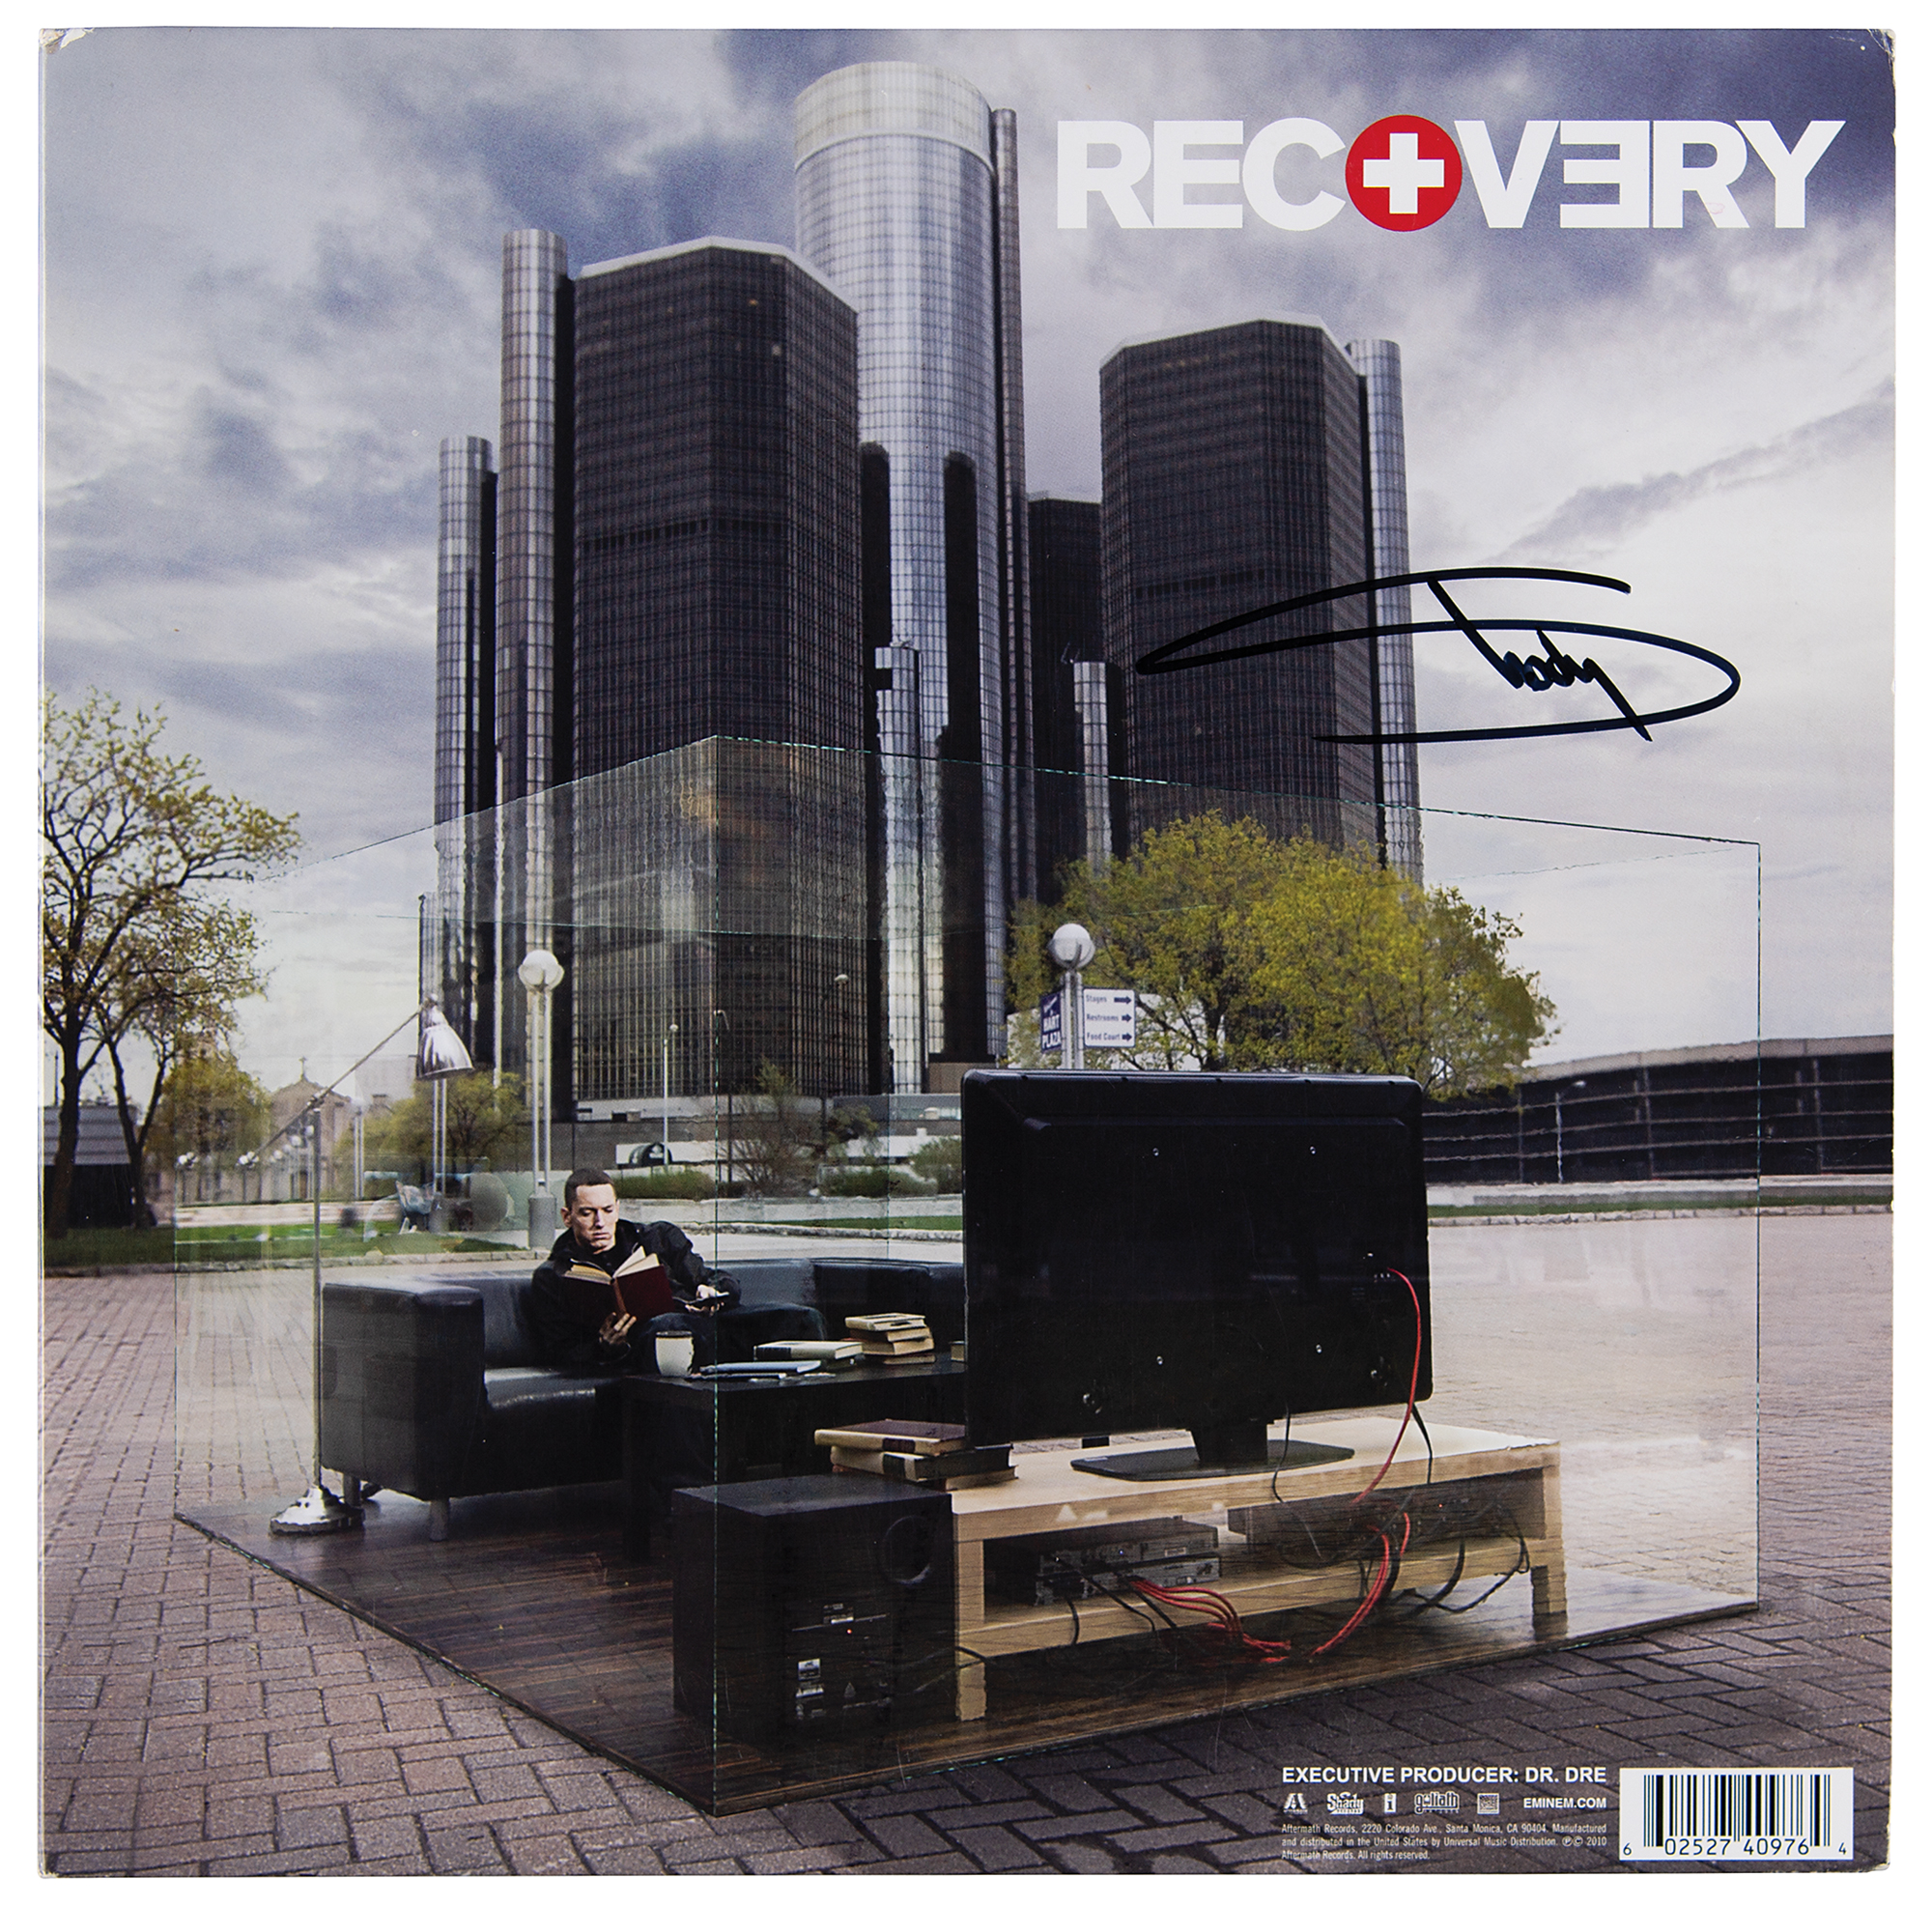 Eminem Signed Album - Recovery